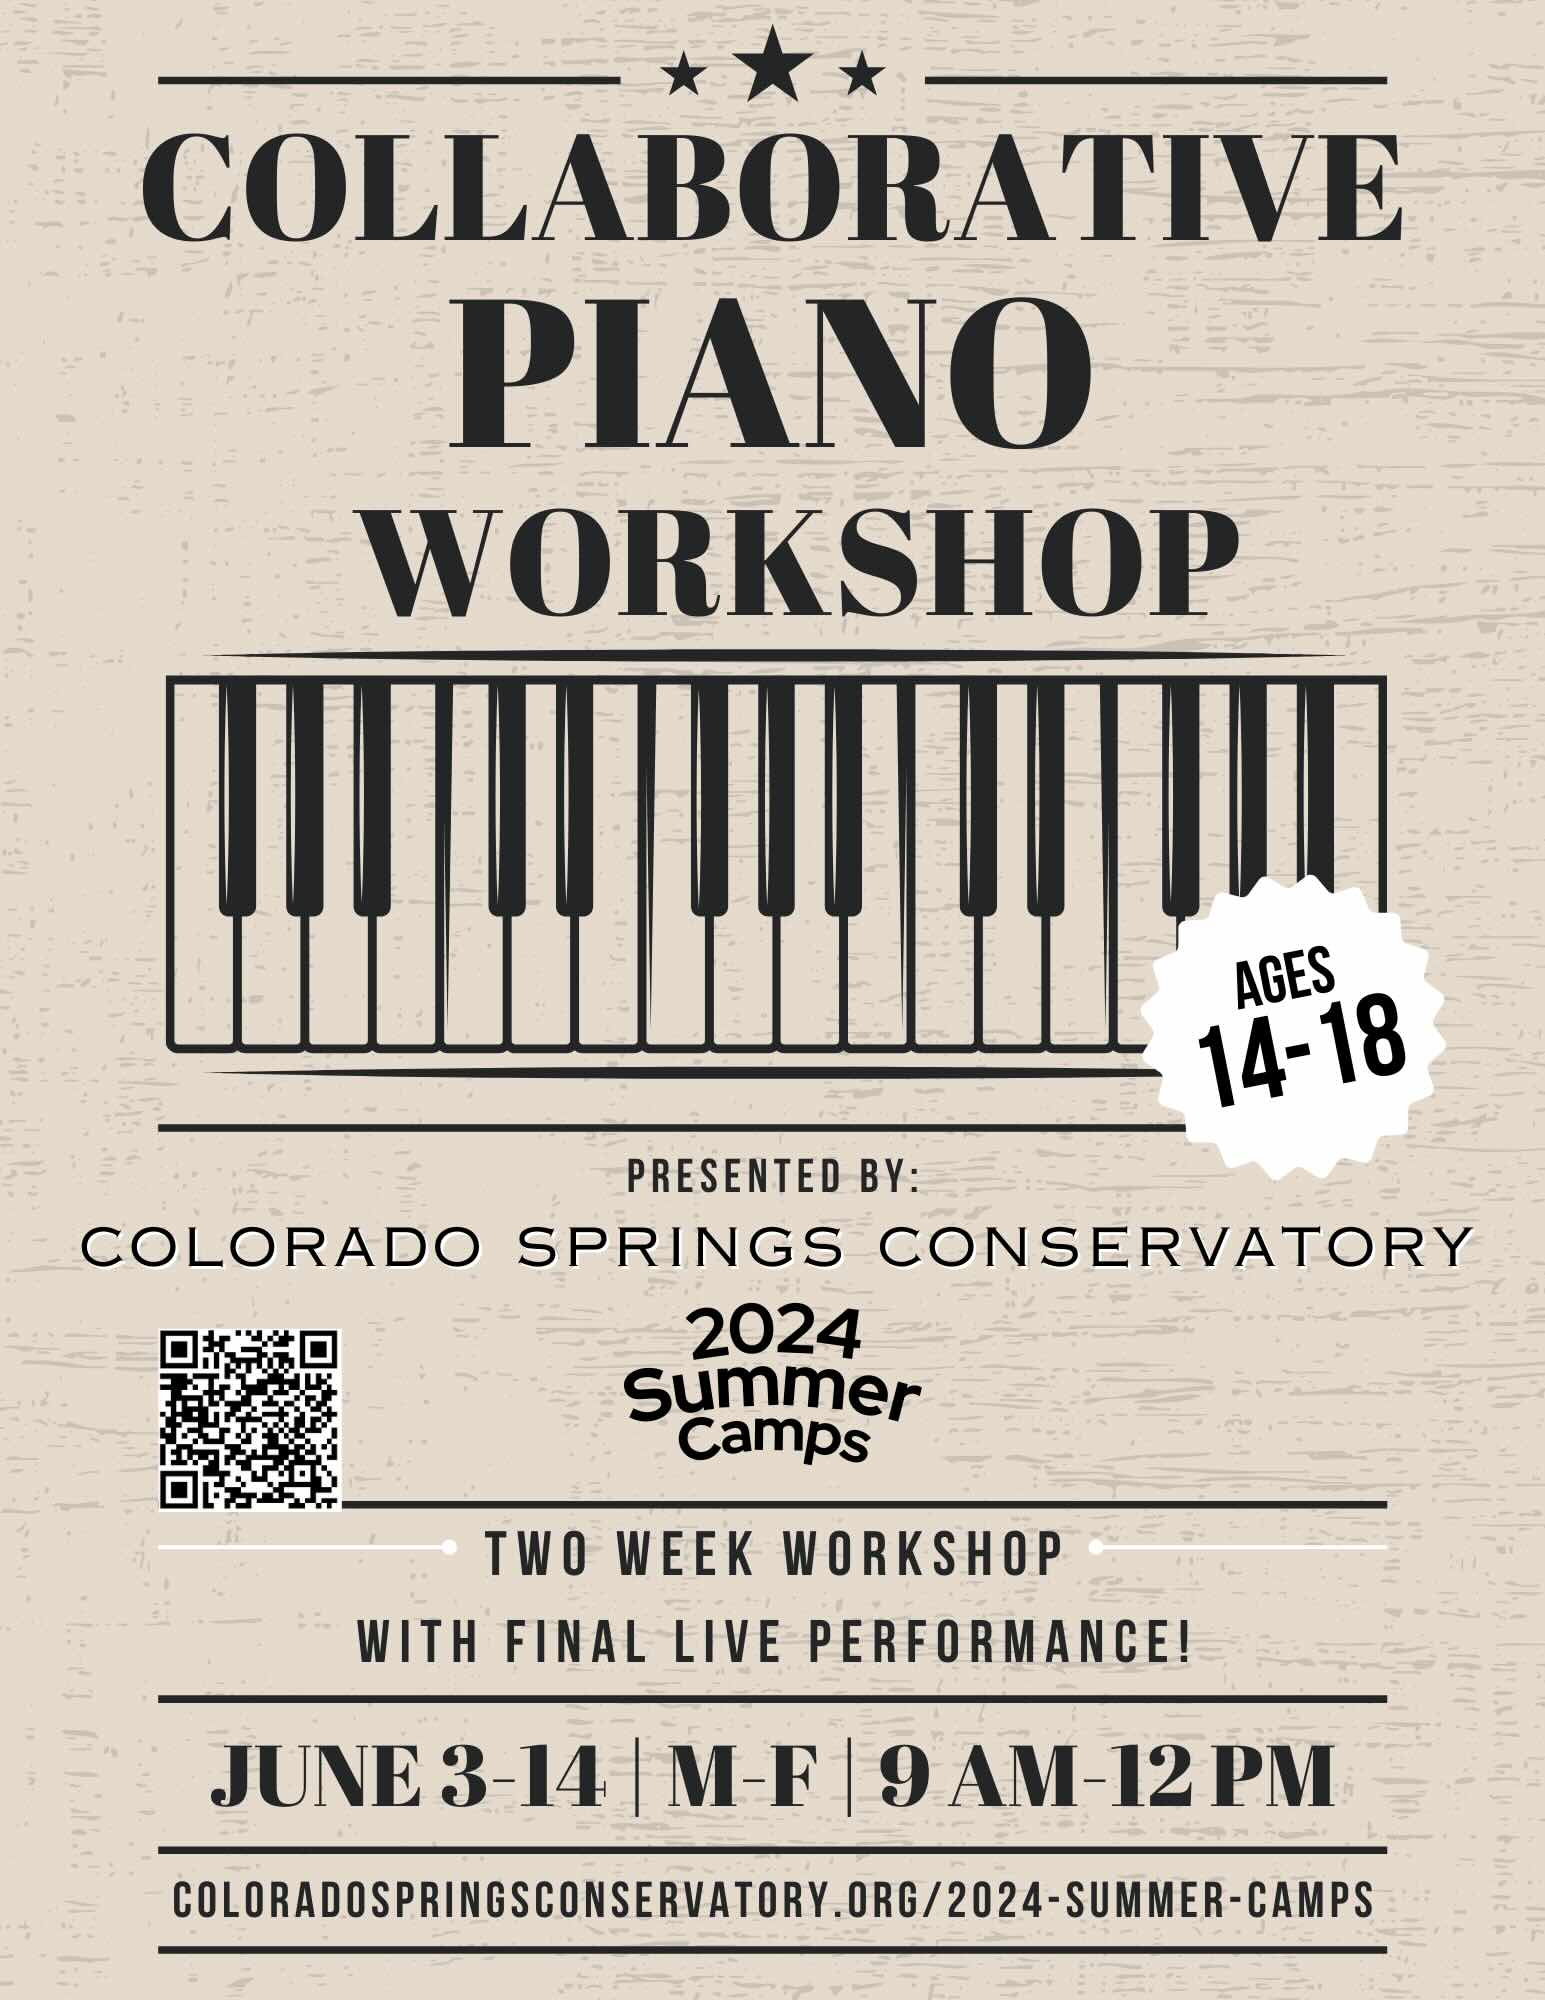 Piano workshop